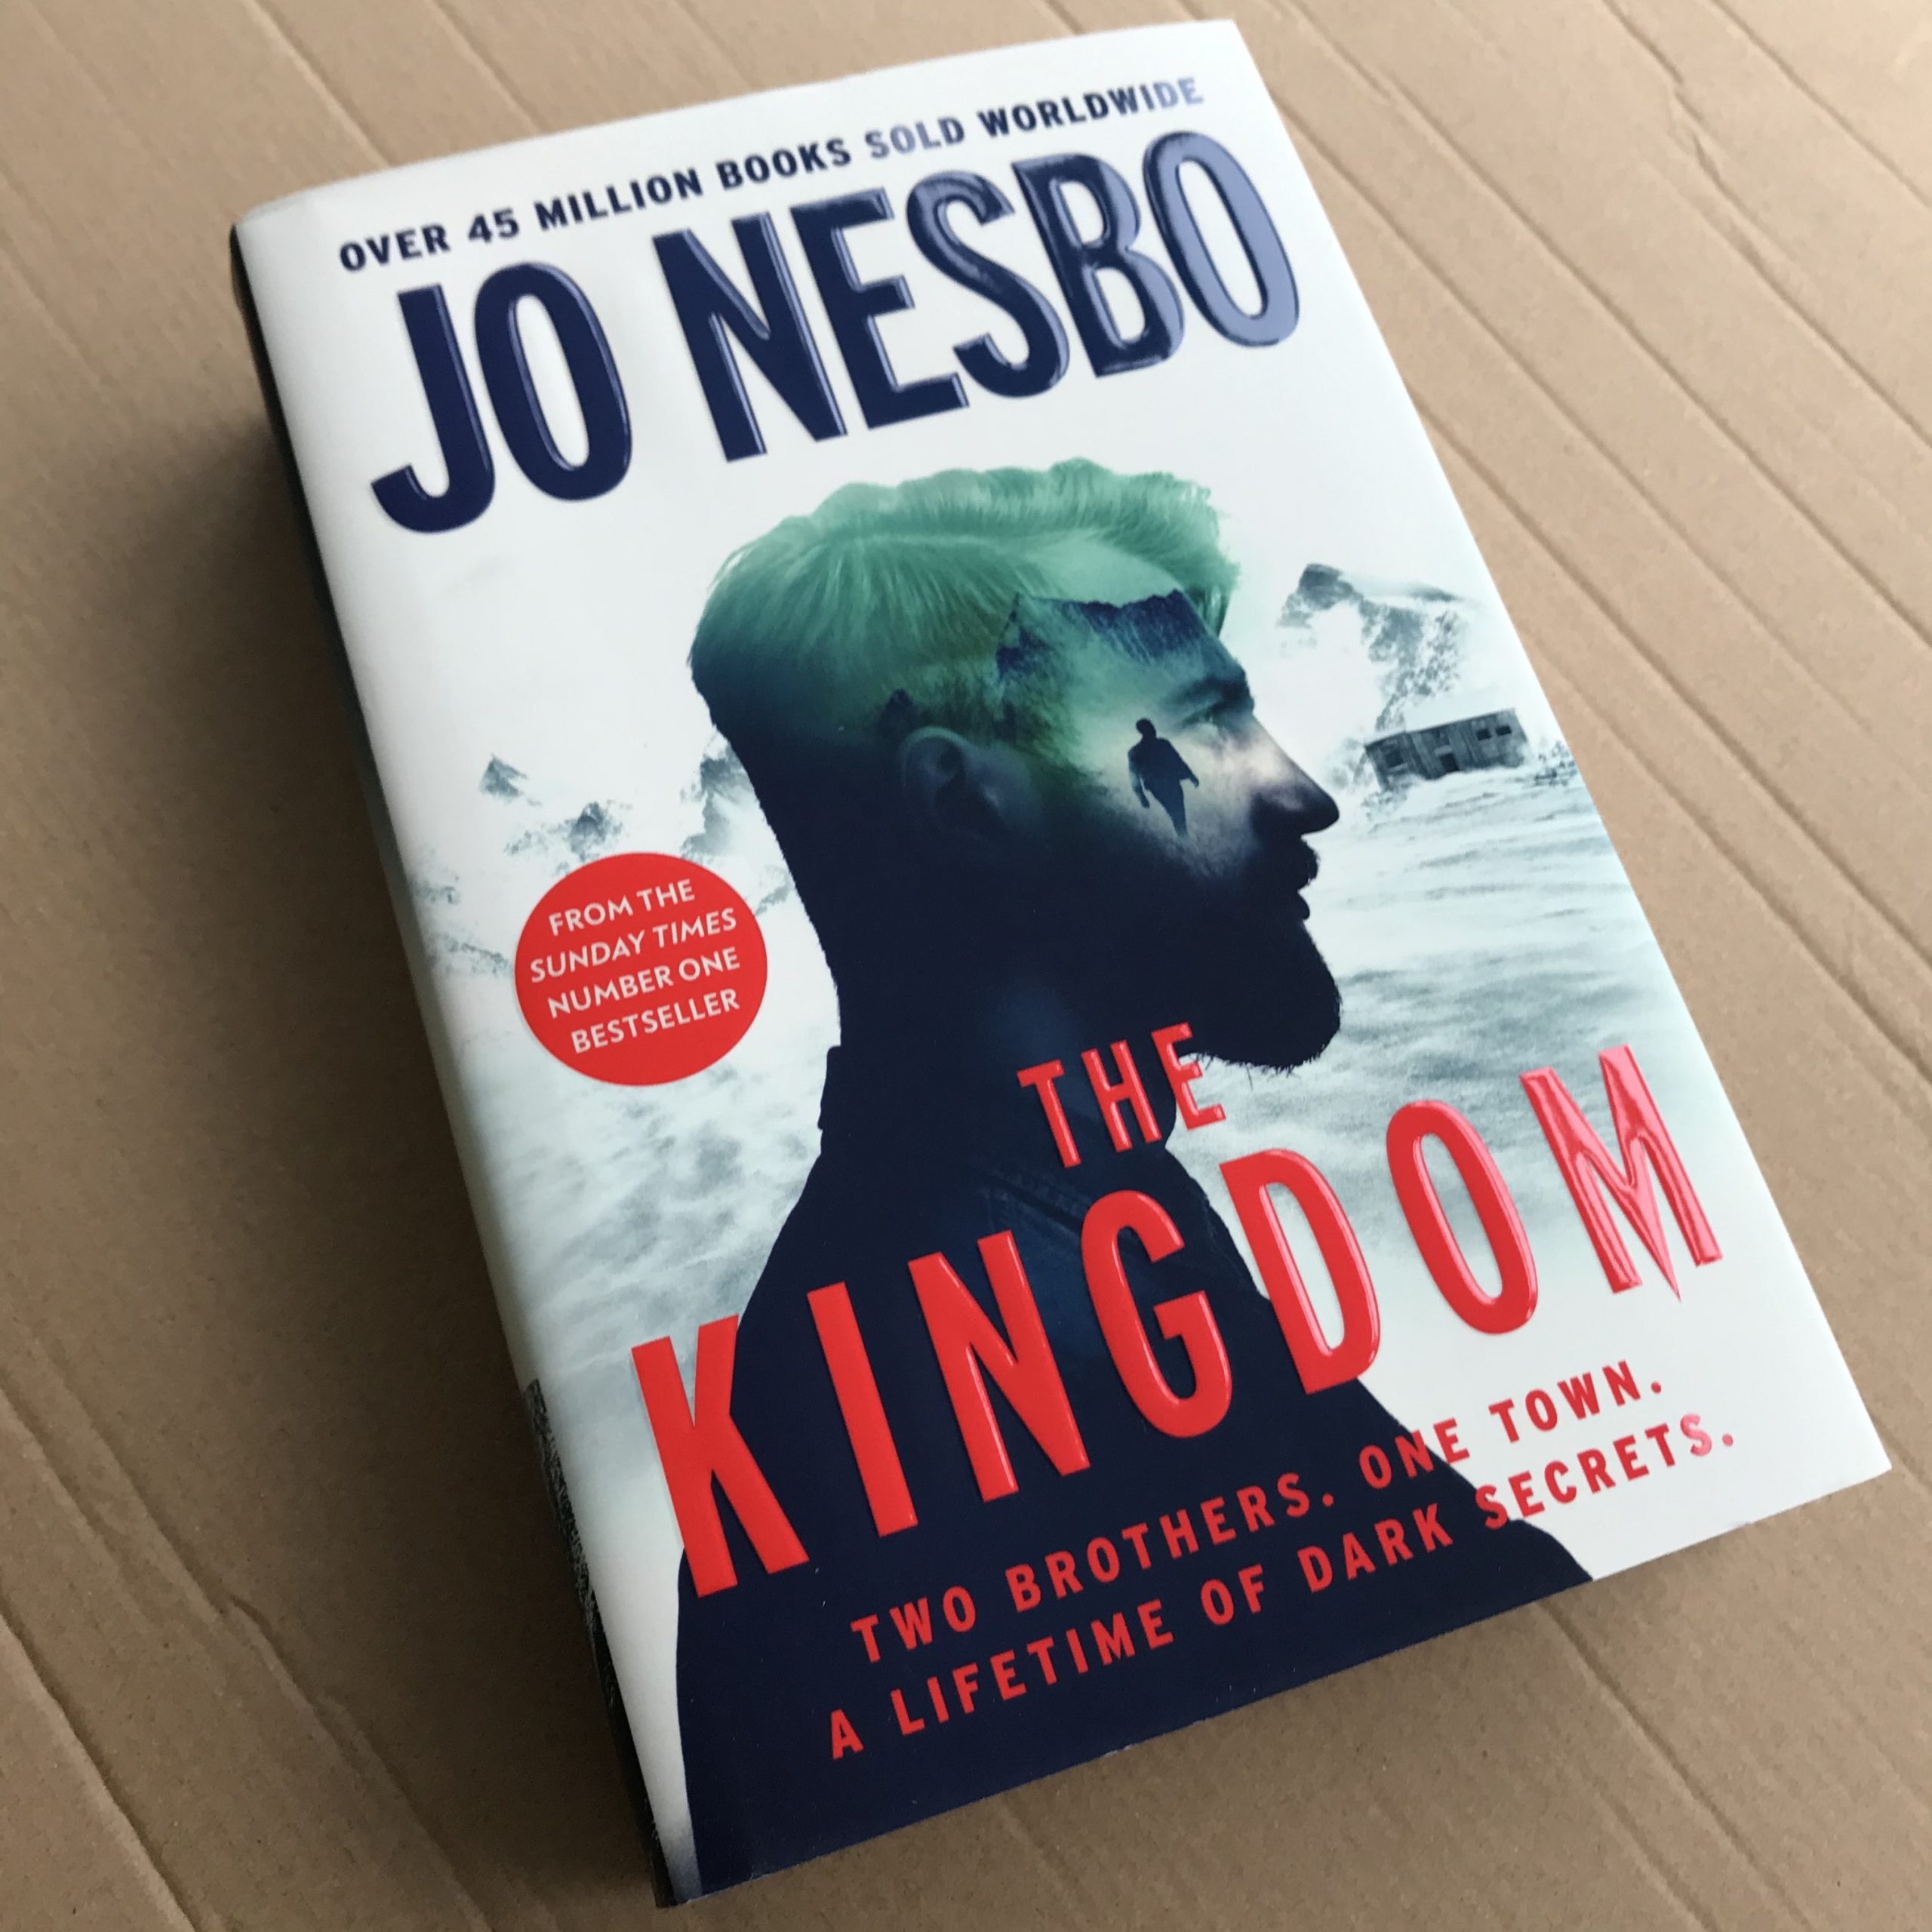 First look: The Kingdom by Jo Nesbo